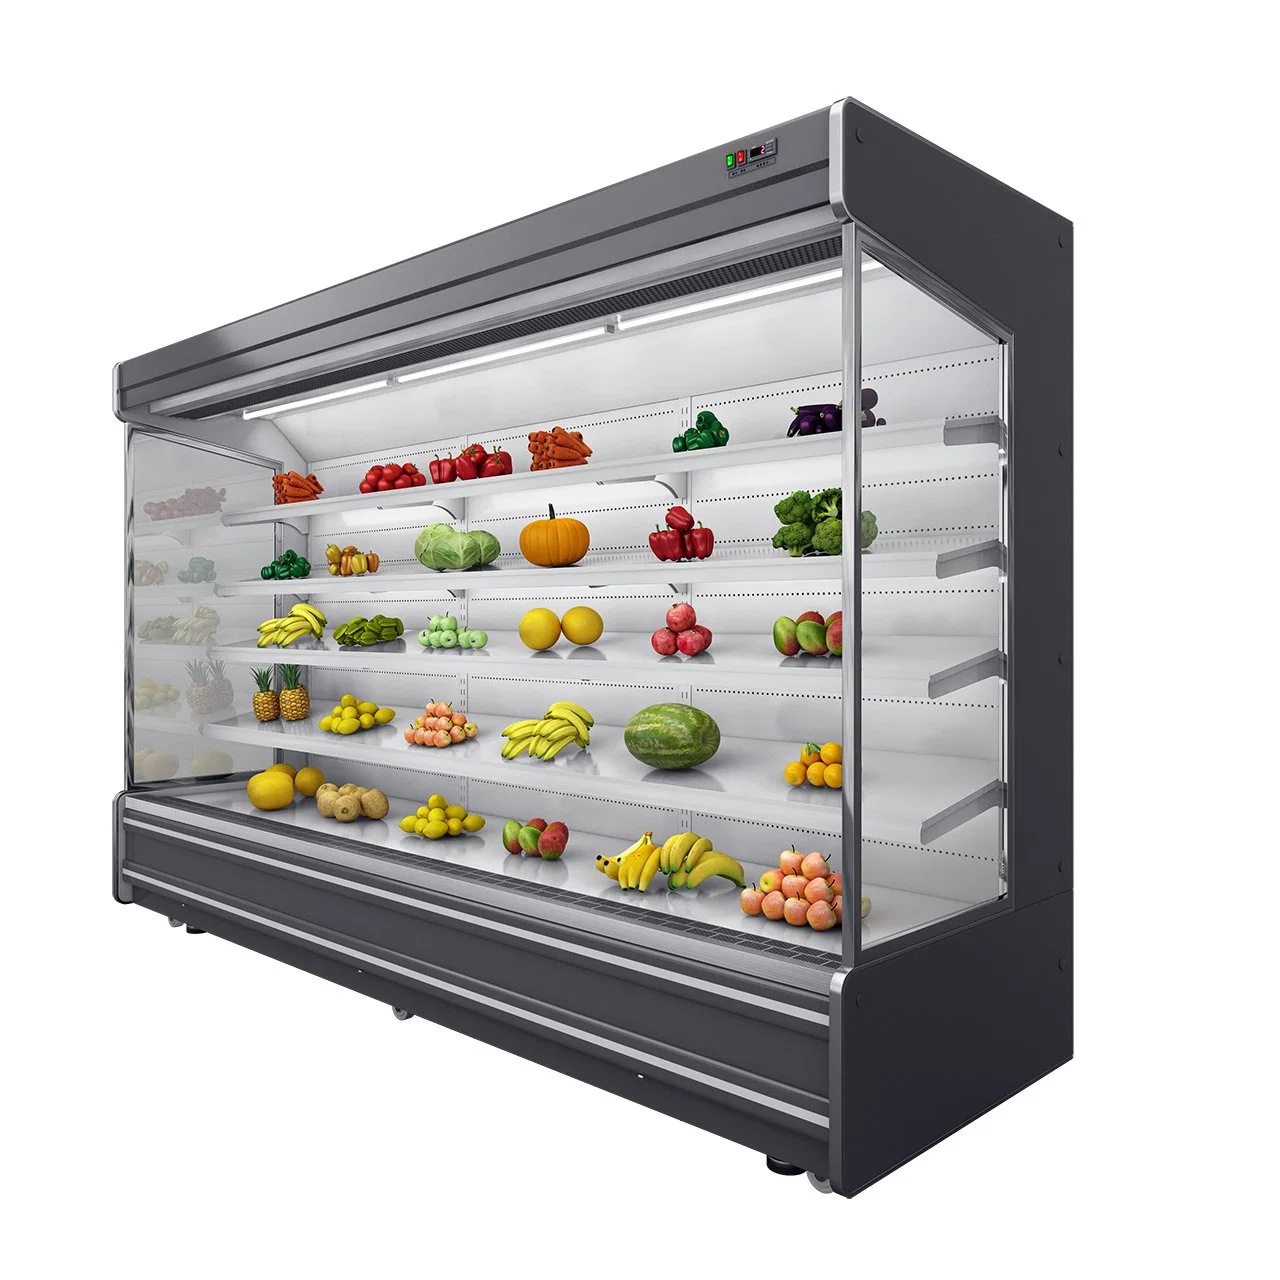 Multi-Deck Showcase Glass Door Freezer Supermarket Commercial Refrigerator Open Chiller Display Cooler for Stores